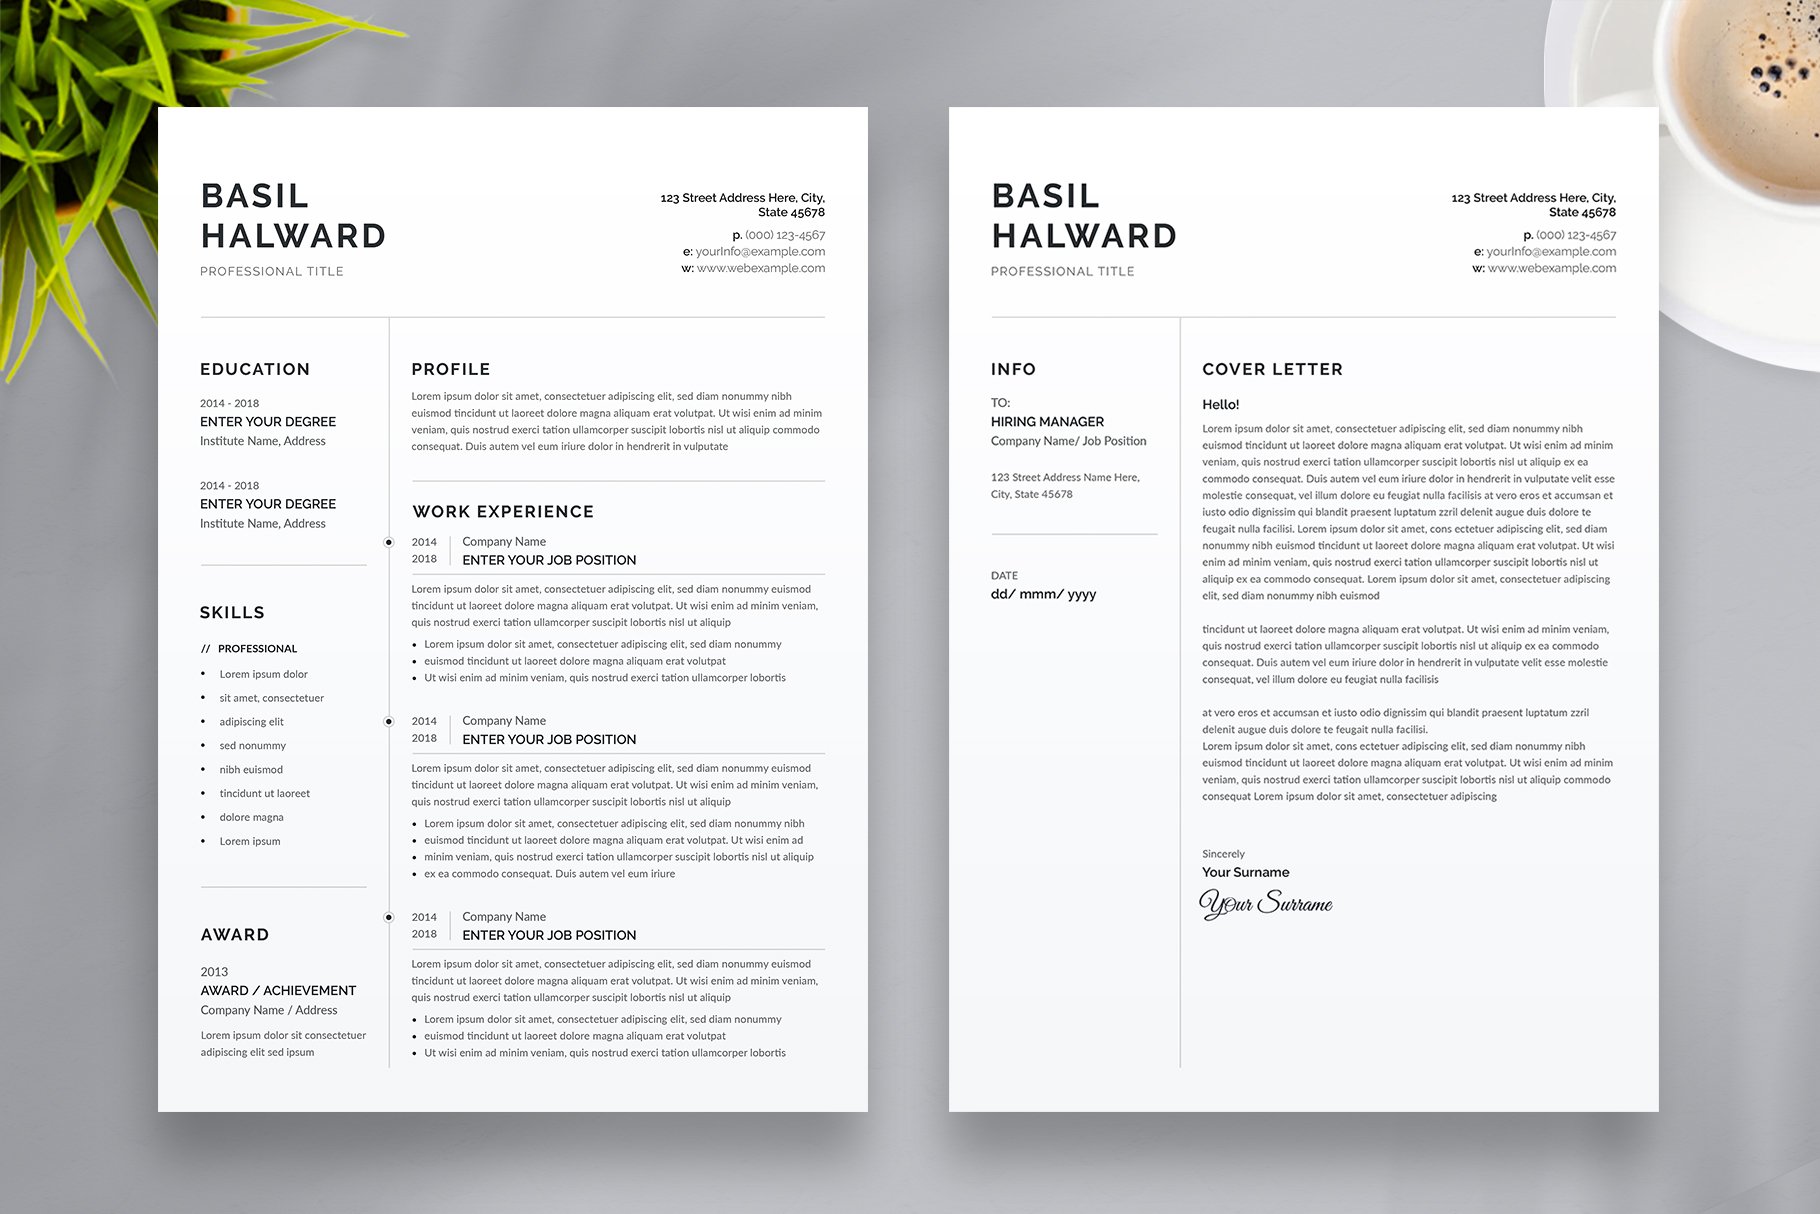 Minimalist Resume / CV preview image.